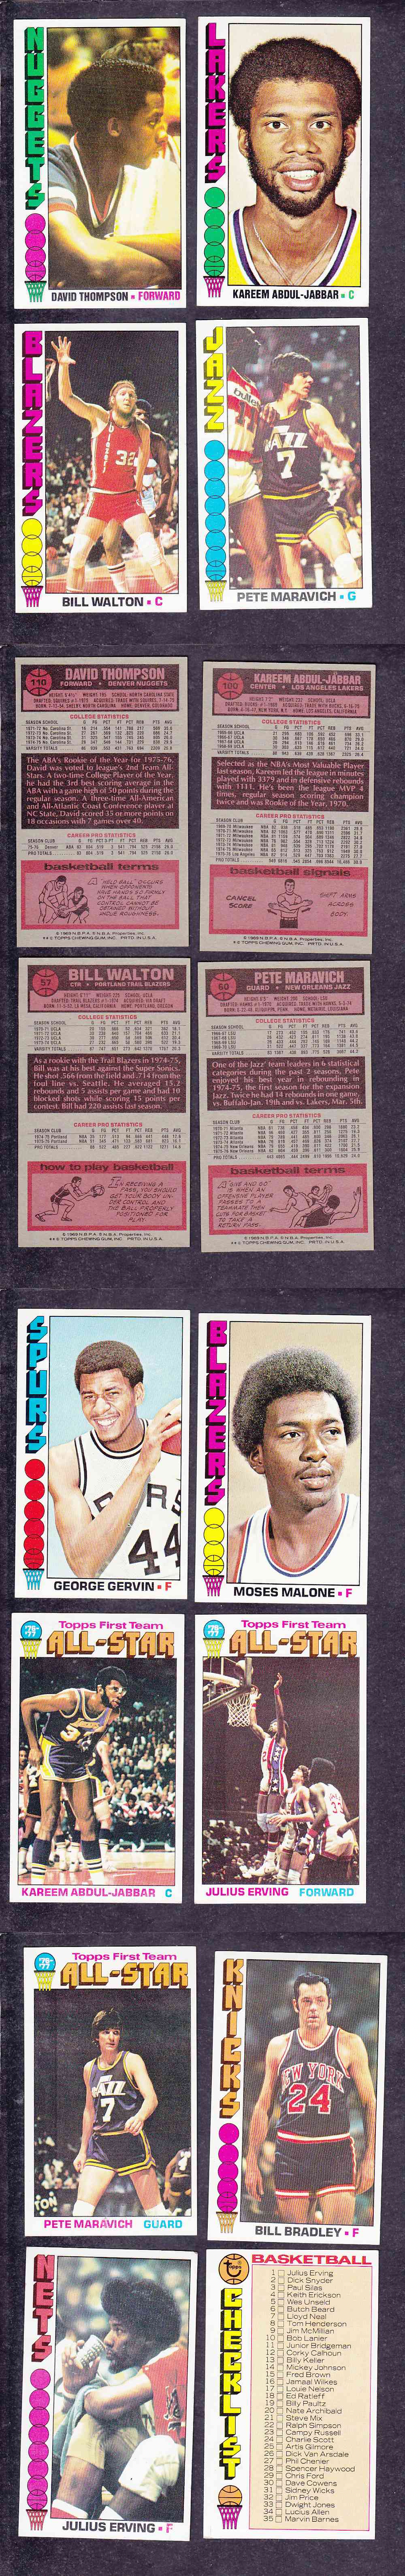 1976-77 NBA TOPPS BASKETBALL CARD FULL SET 144/144 photo